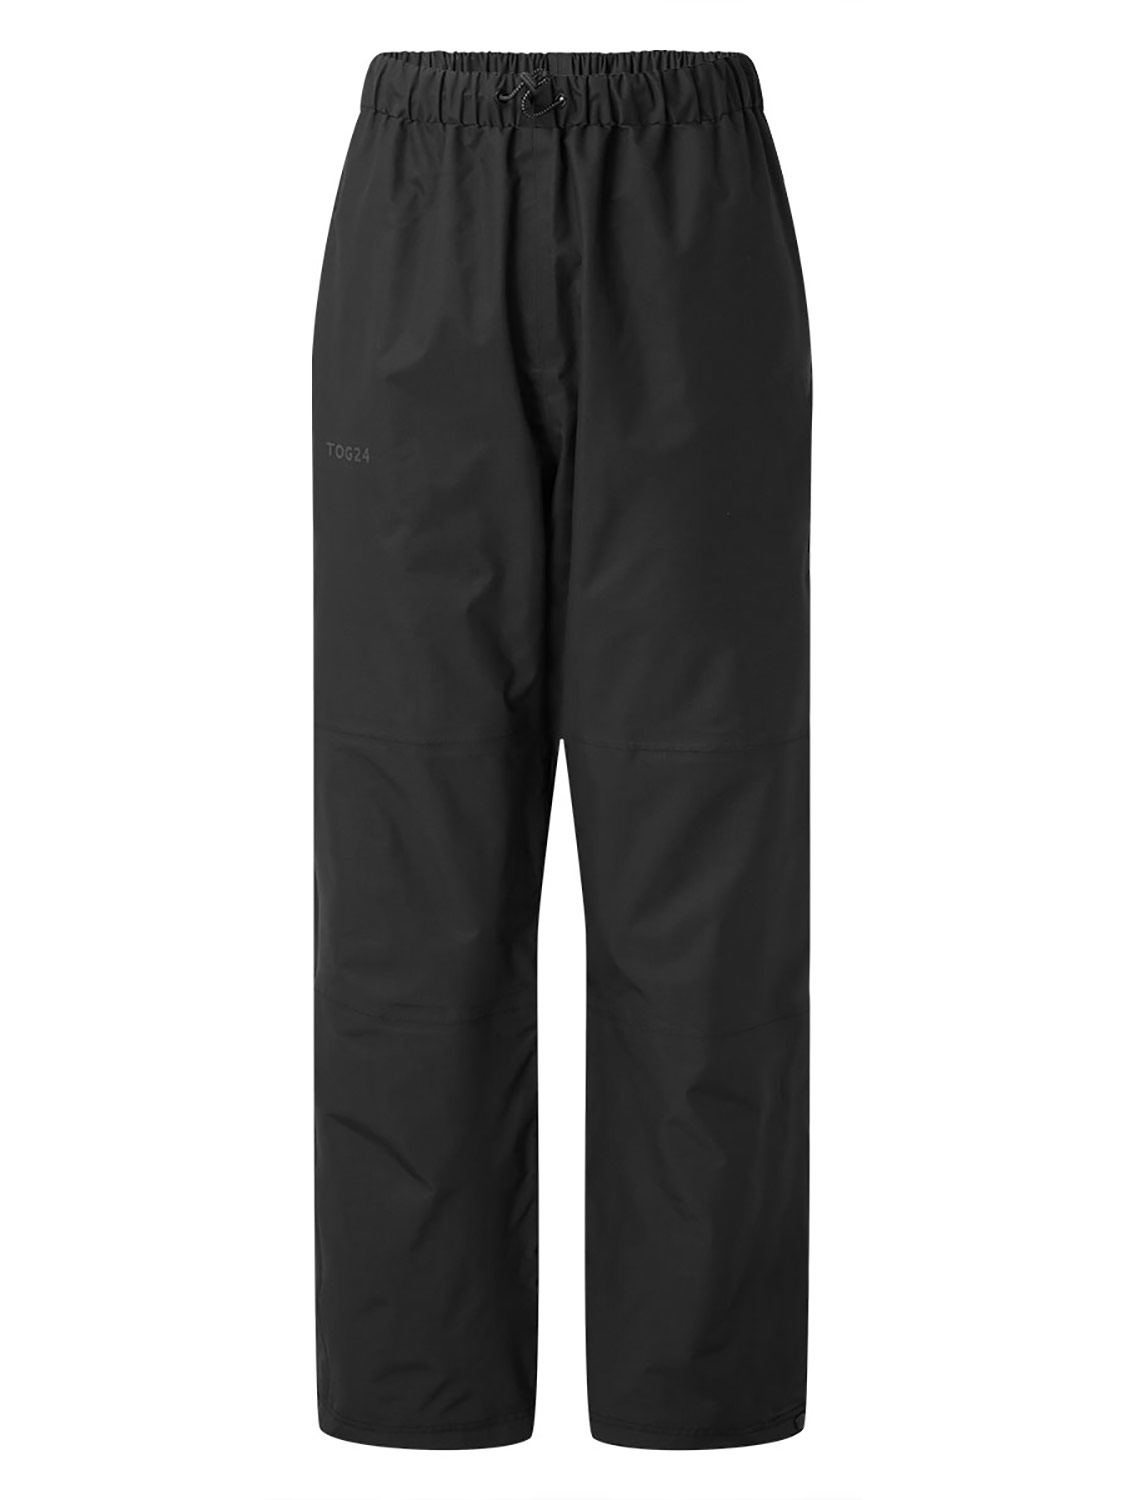 Steward Waterproof Trousers Regular - Size: 8 Black Tog24